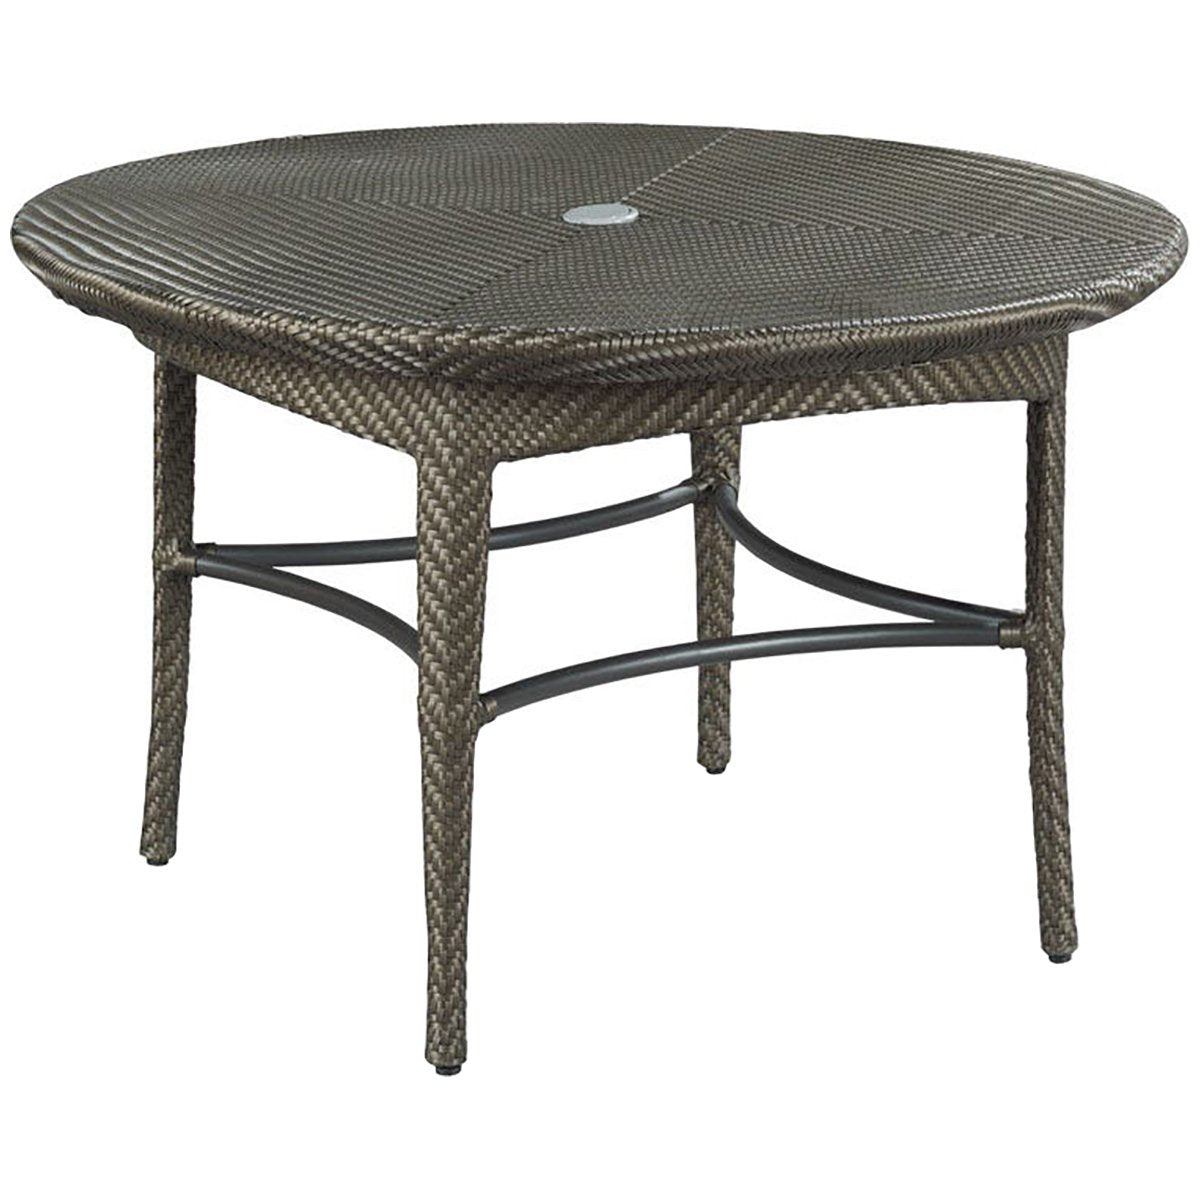 Woodbridge Furniture Marigot Outdoor Cafe Table